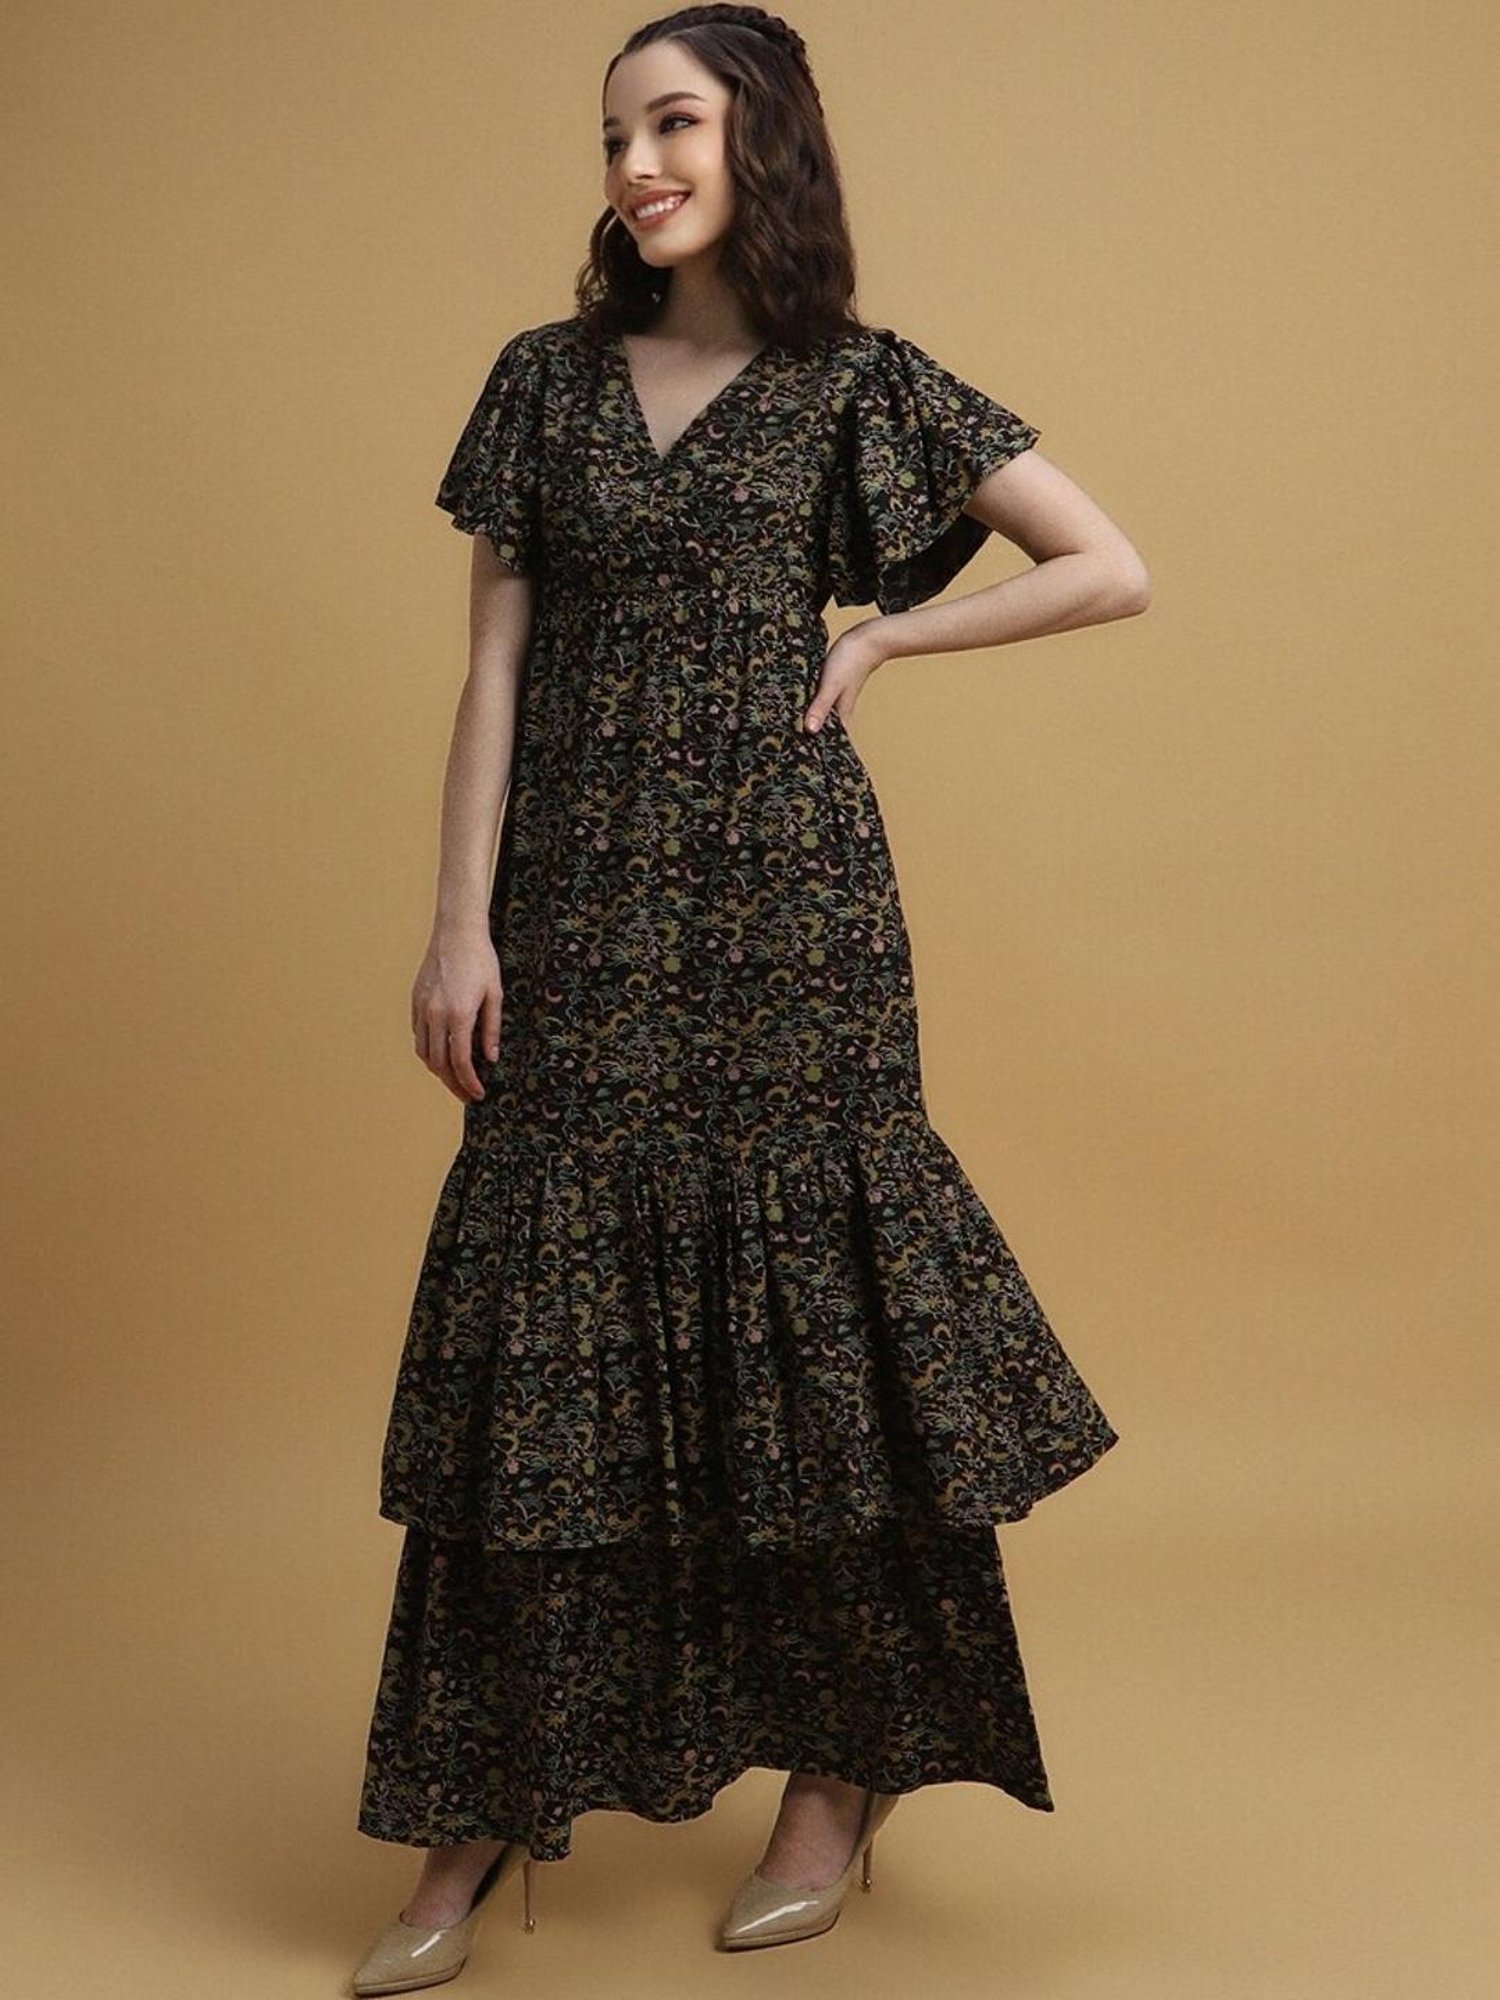 Black Floral Print Dress - Sleeveless Maxi Dress - Chiffon Dress - Lulus